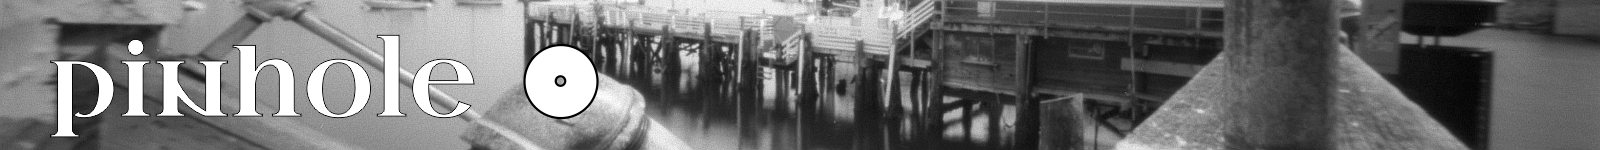 image of Monterey Wharf with 4x5 pinhole camera